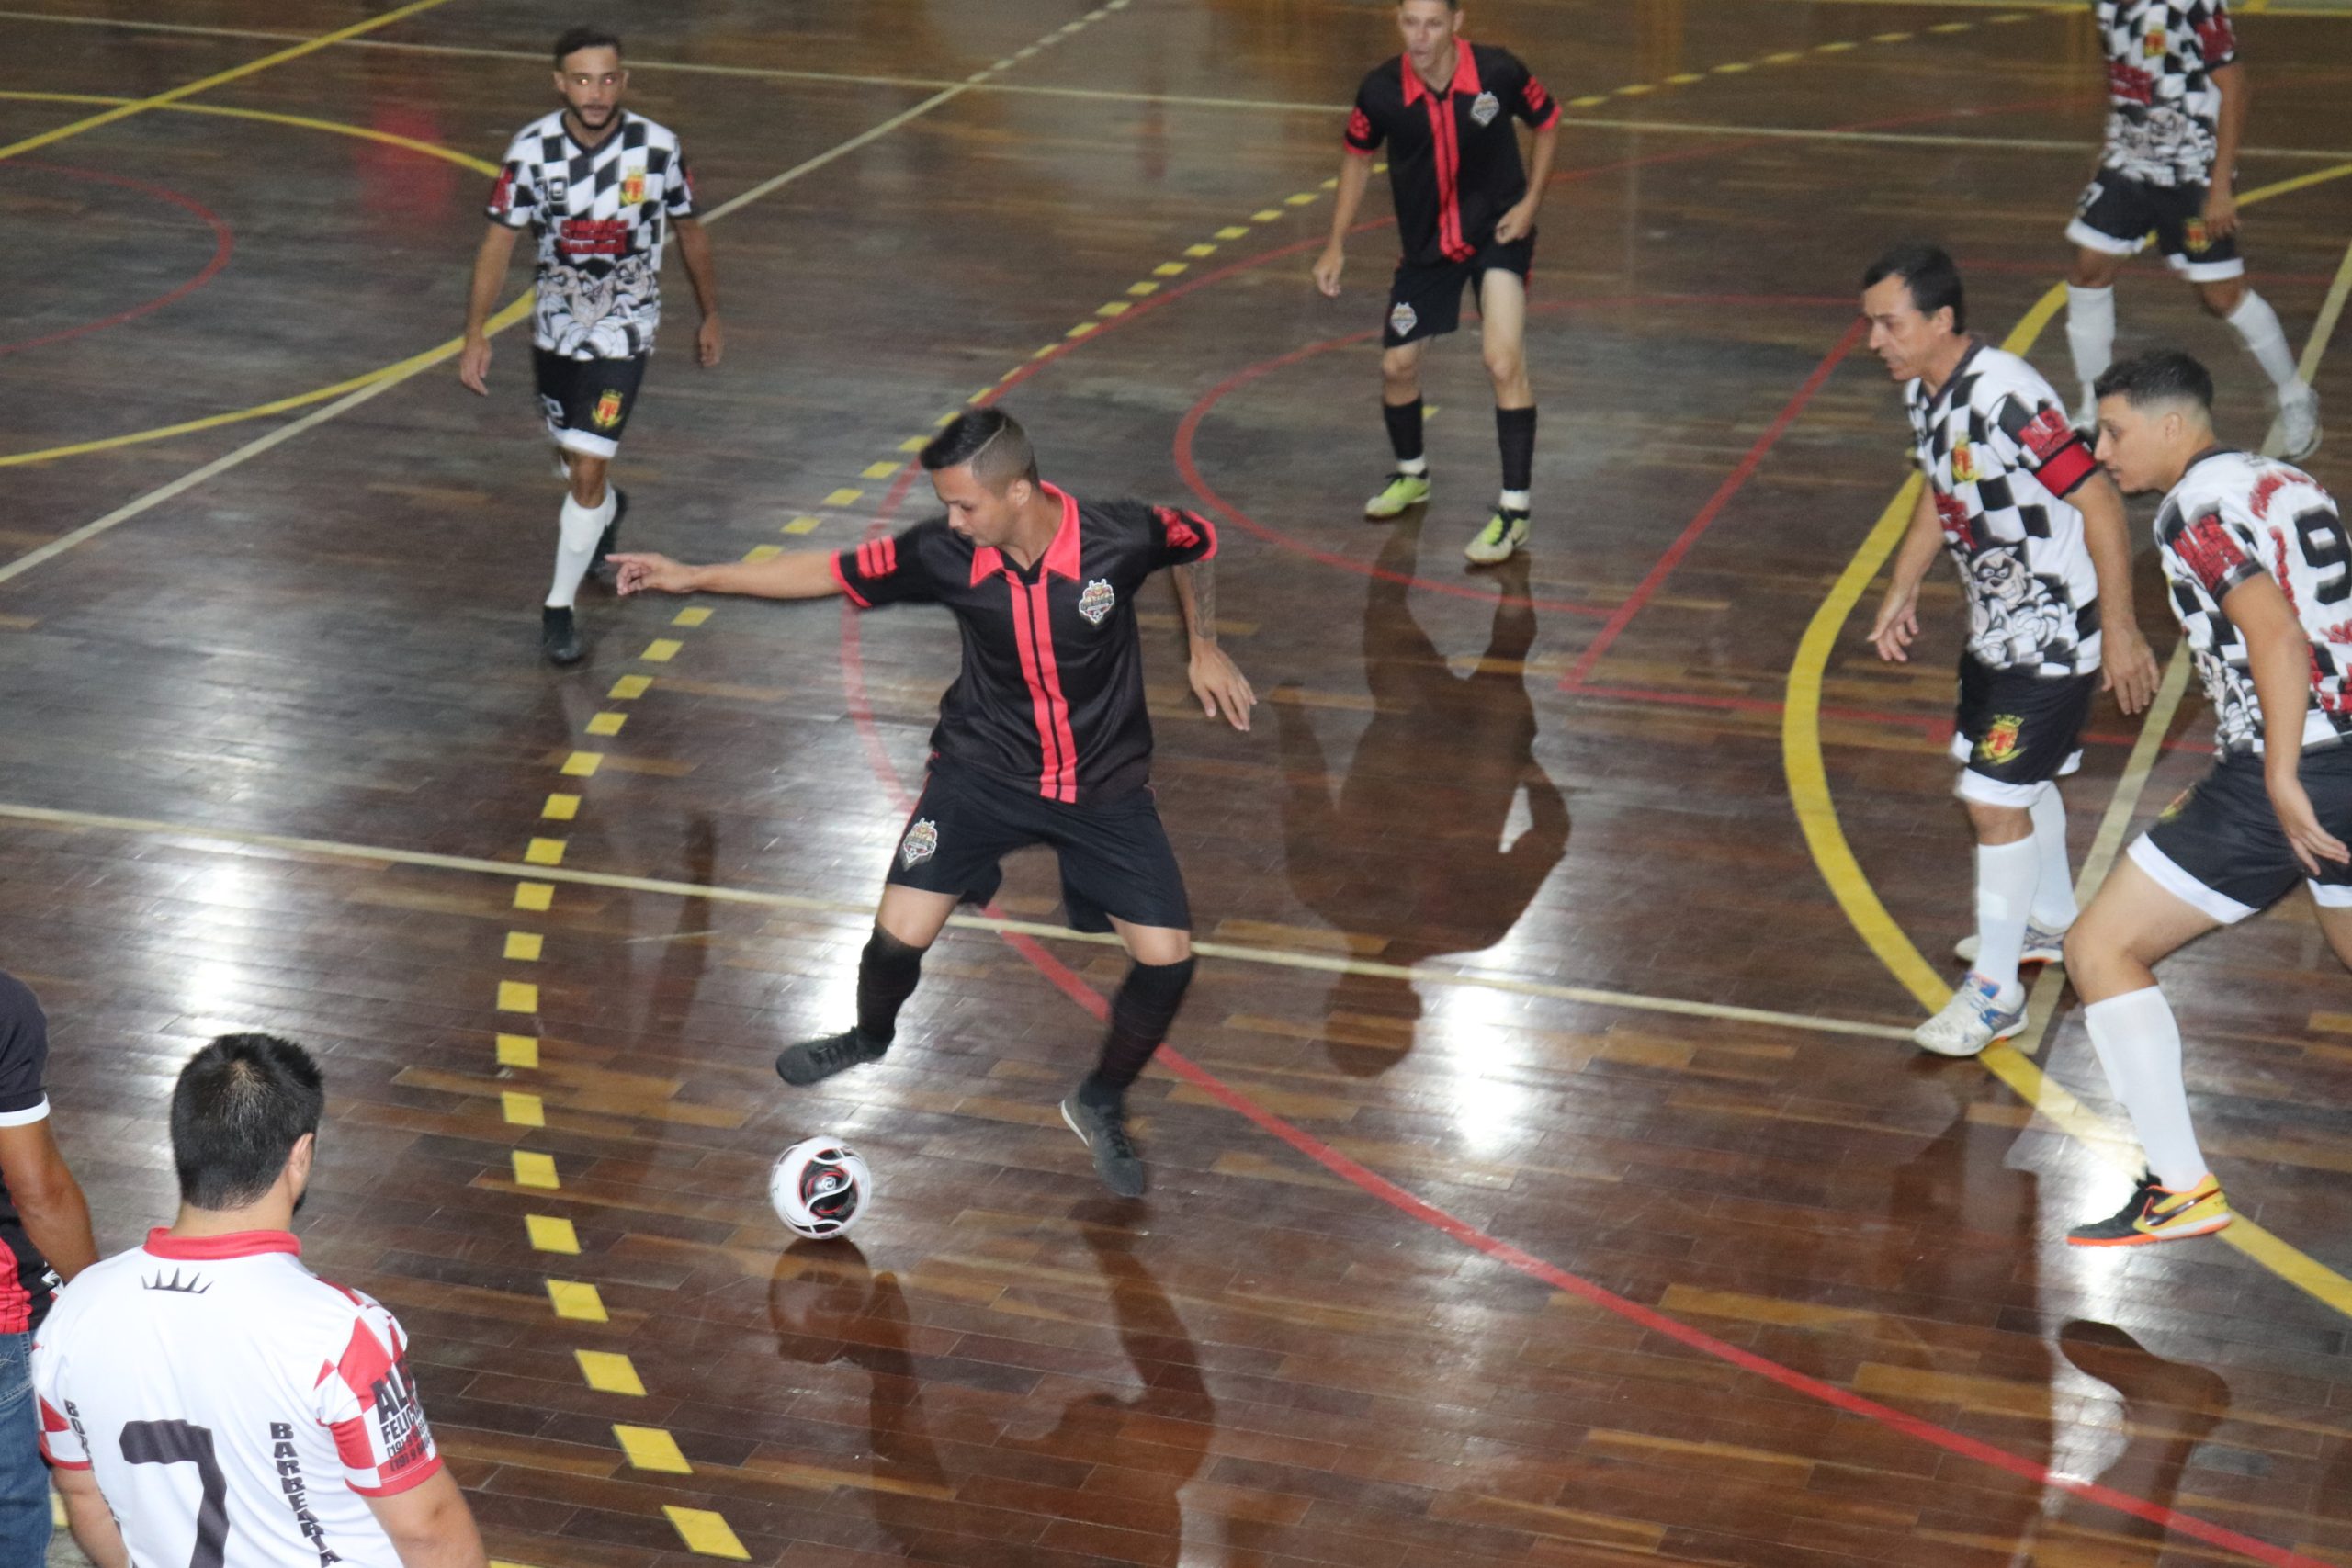 Copa Antônio Mattar de Futsal Amador chega as quartas de final nesta quinta-feira, dia 26